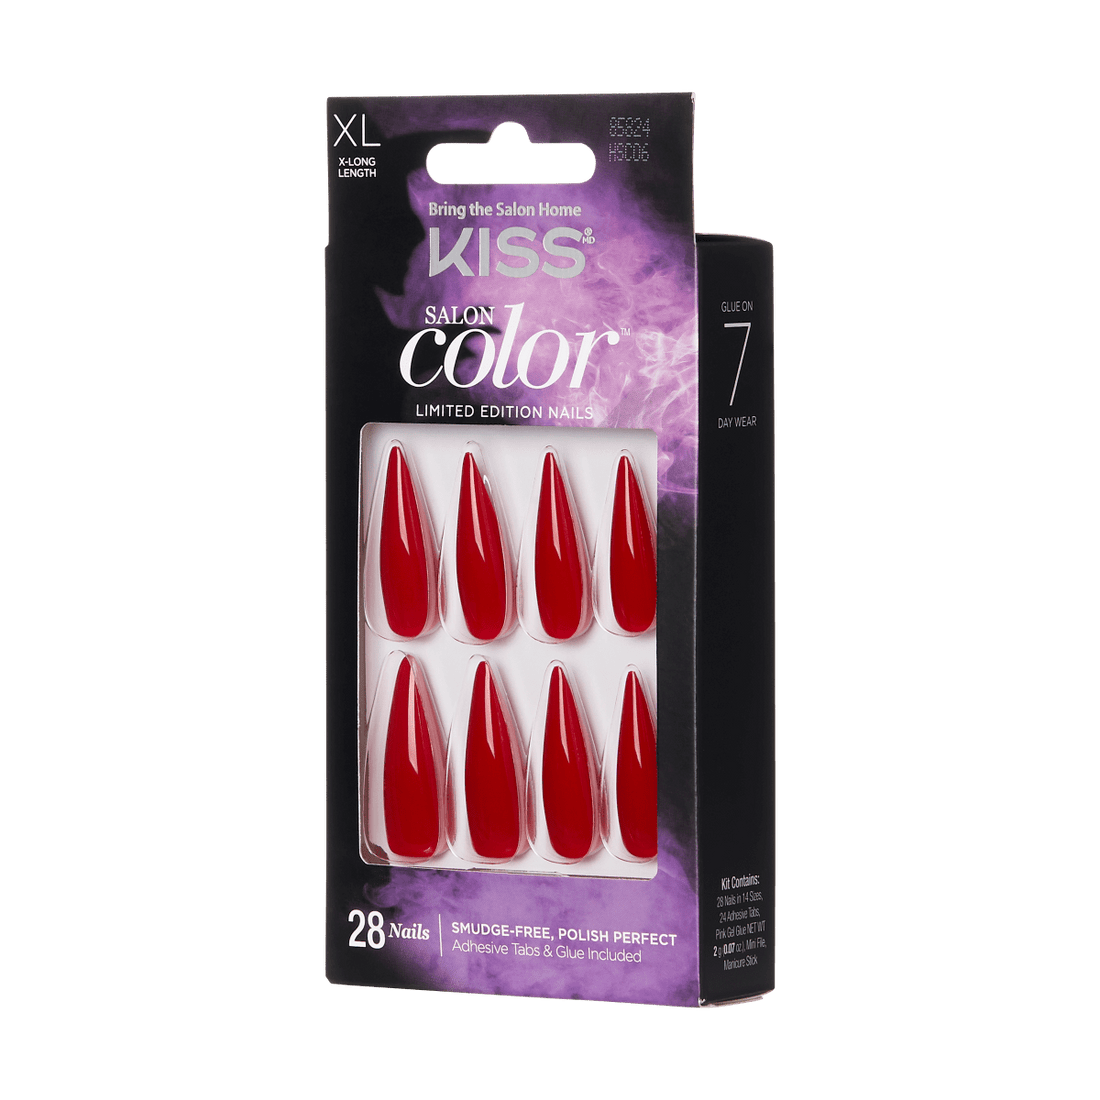 KISS Halloween Salon Color Nails - Pretty Savage